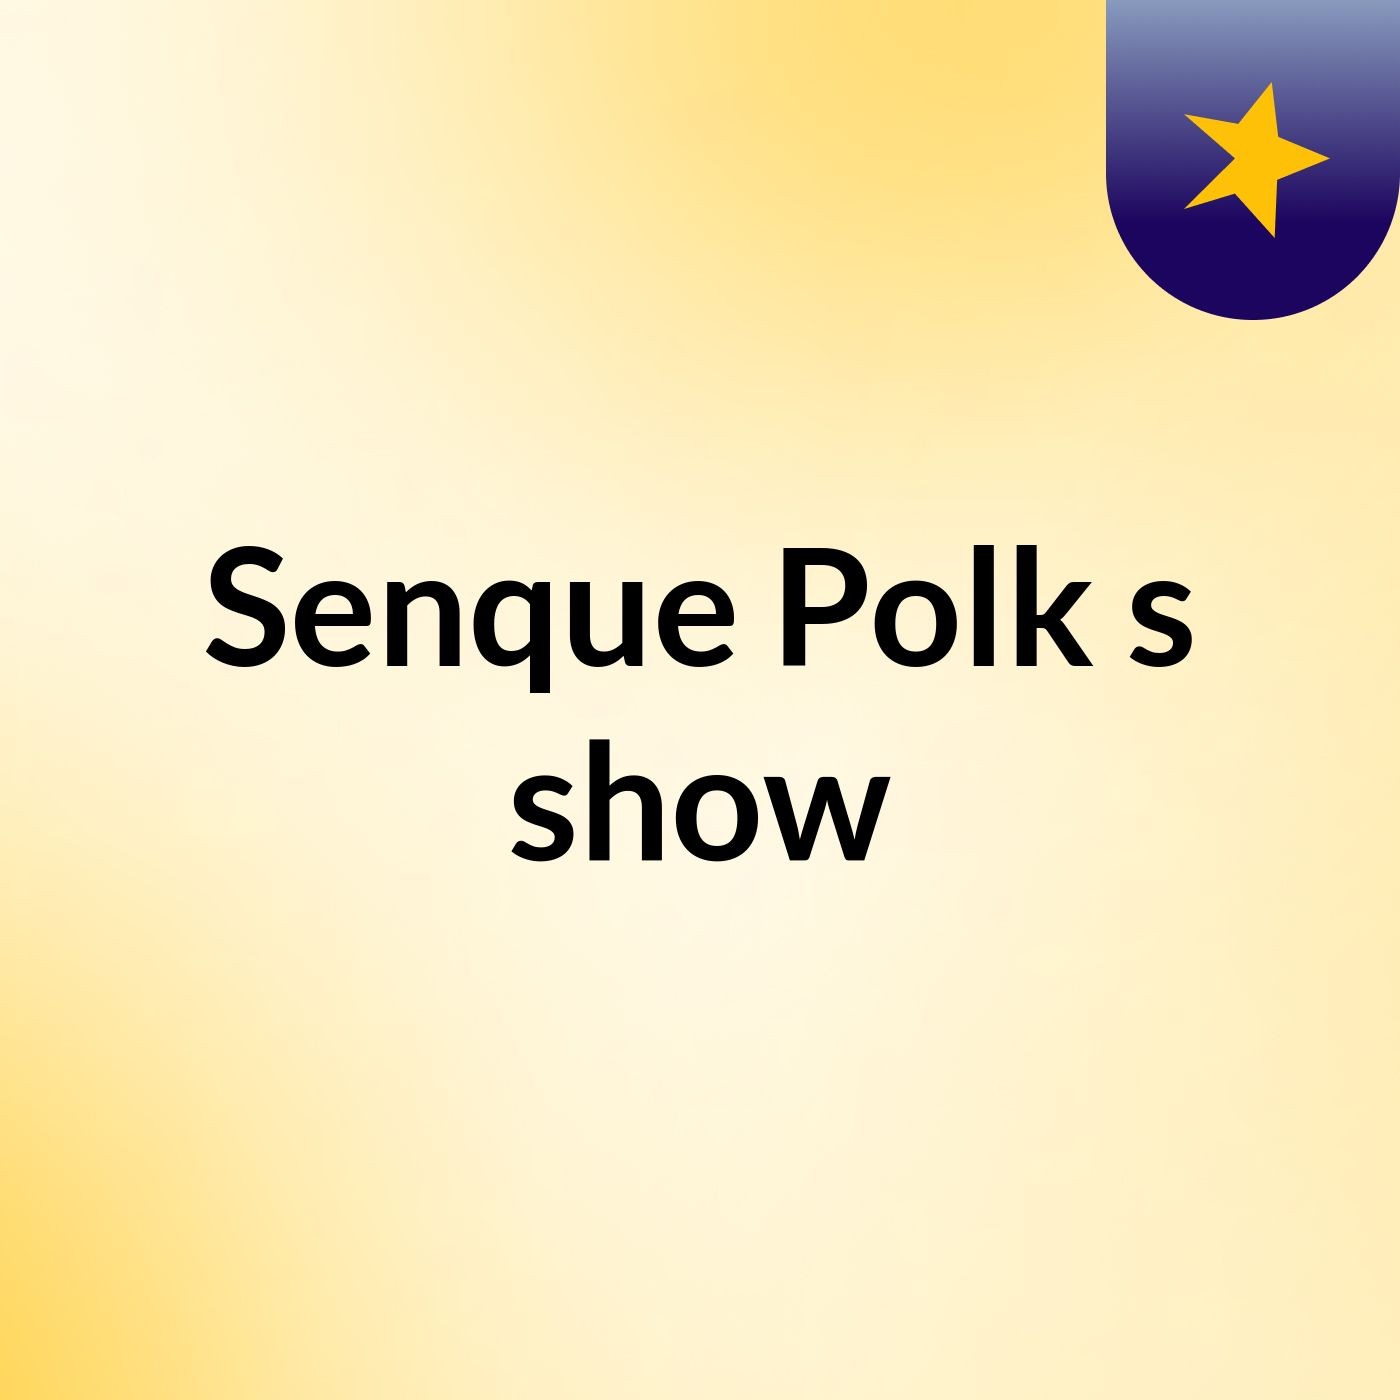 Senque Polk's show